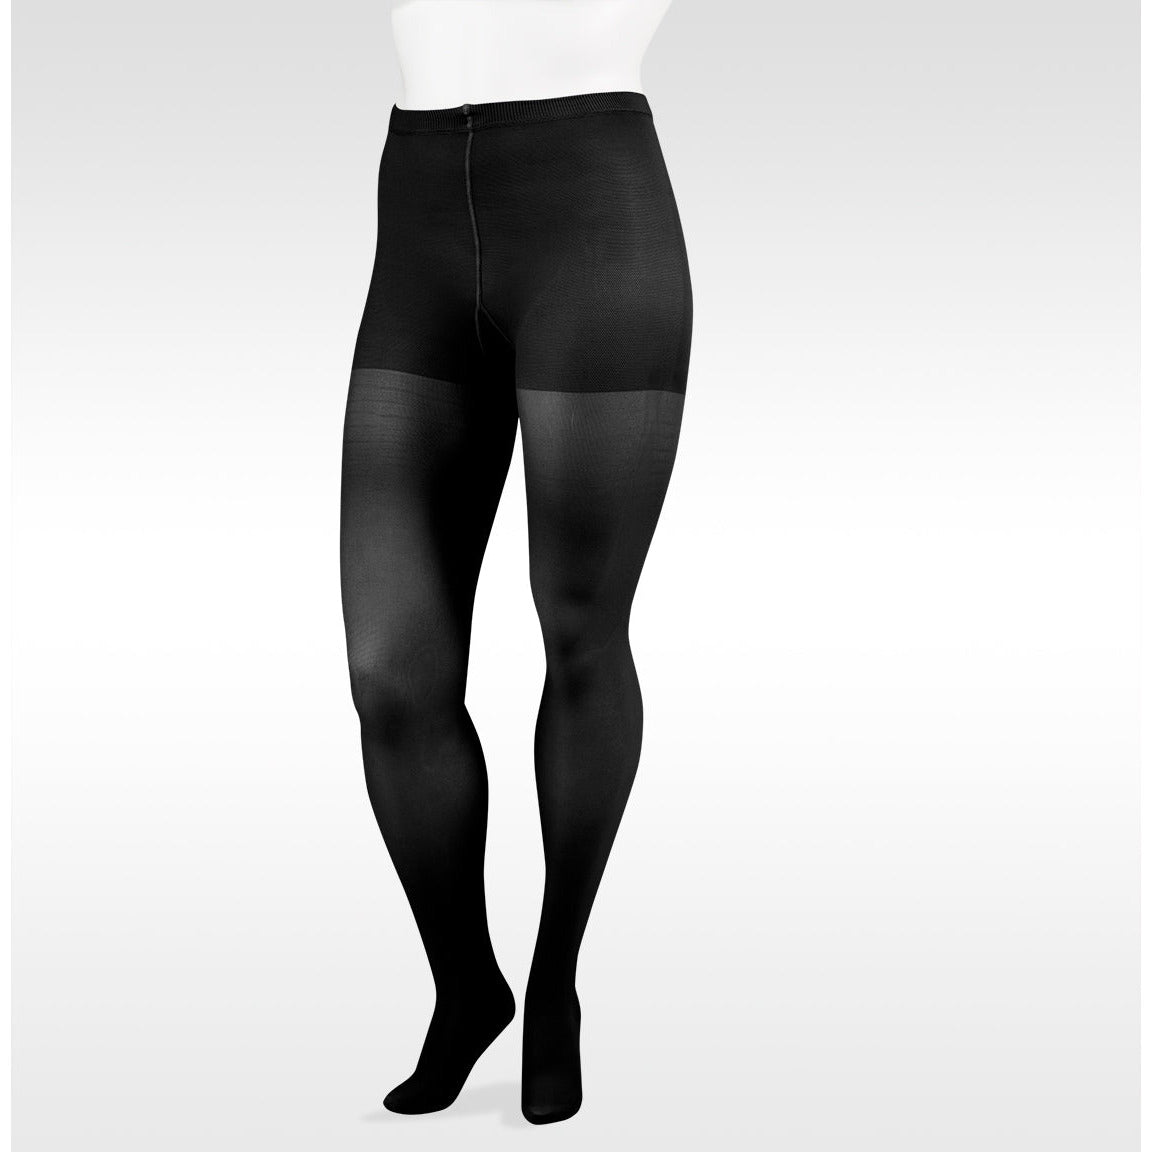 Juzo Soft Pantyhose 20-30 mmhg w/ Elastic Panty, Black